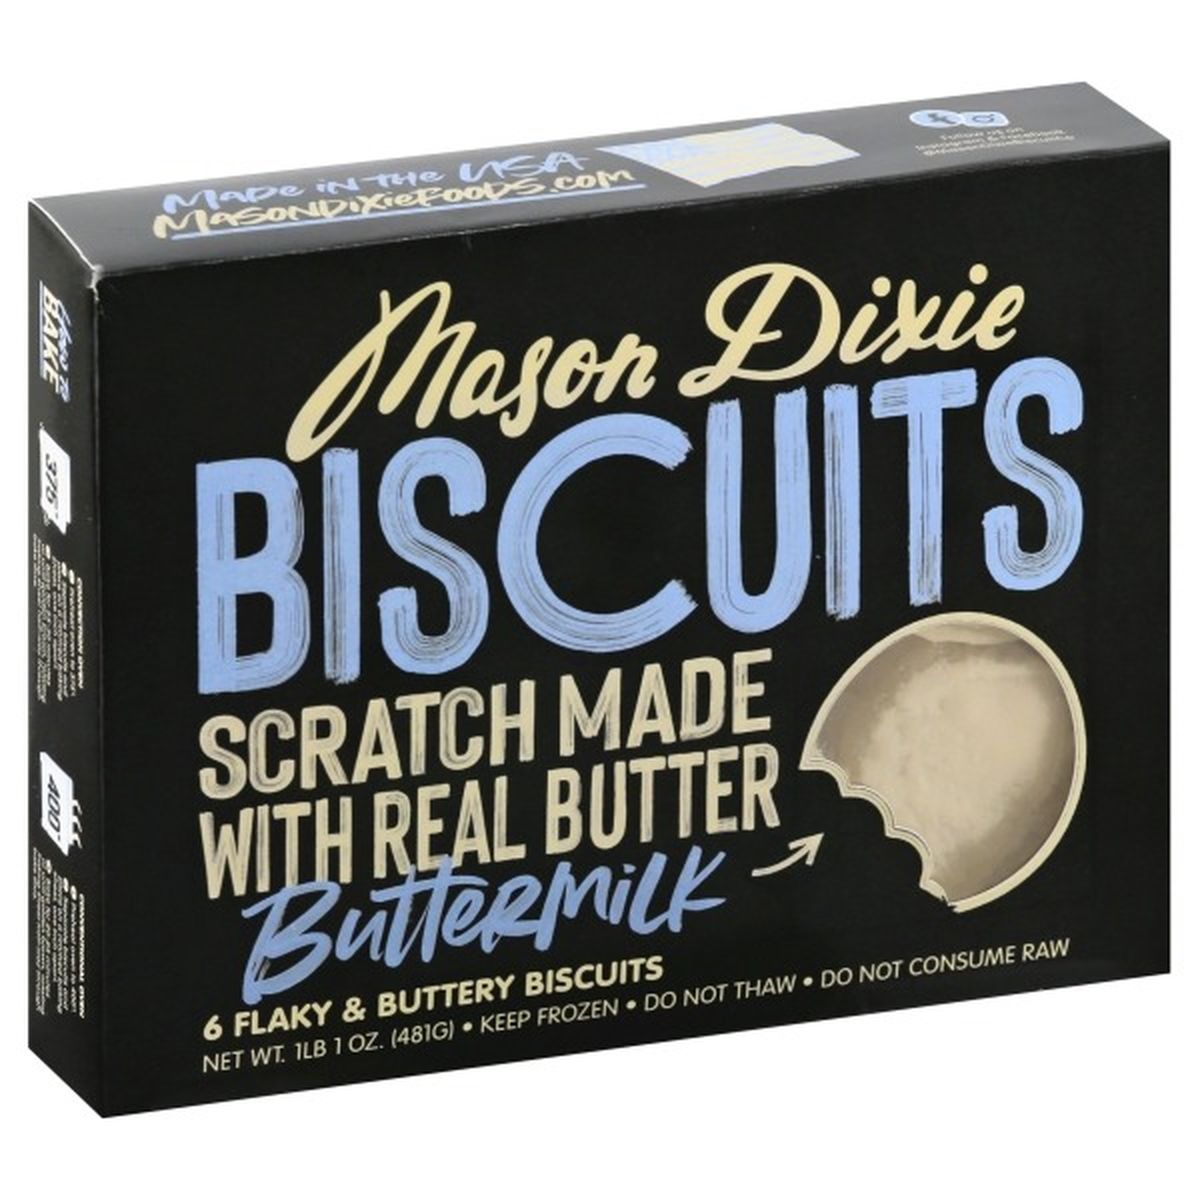 Calories in Mason Dixie Biscuits, Buttermilk